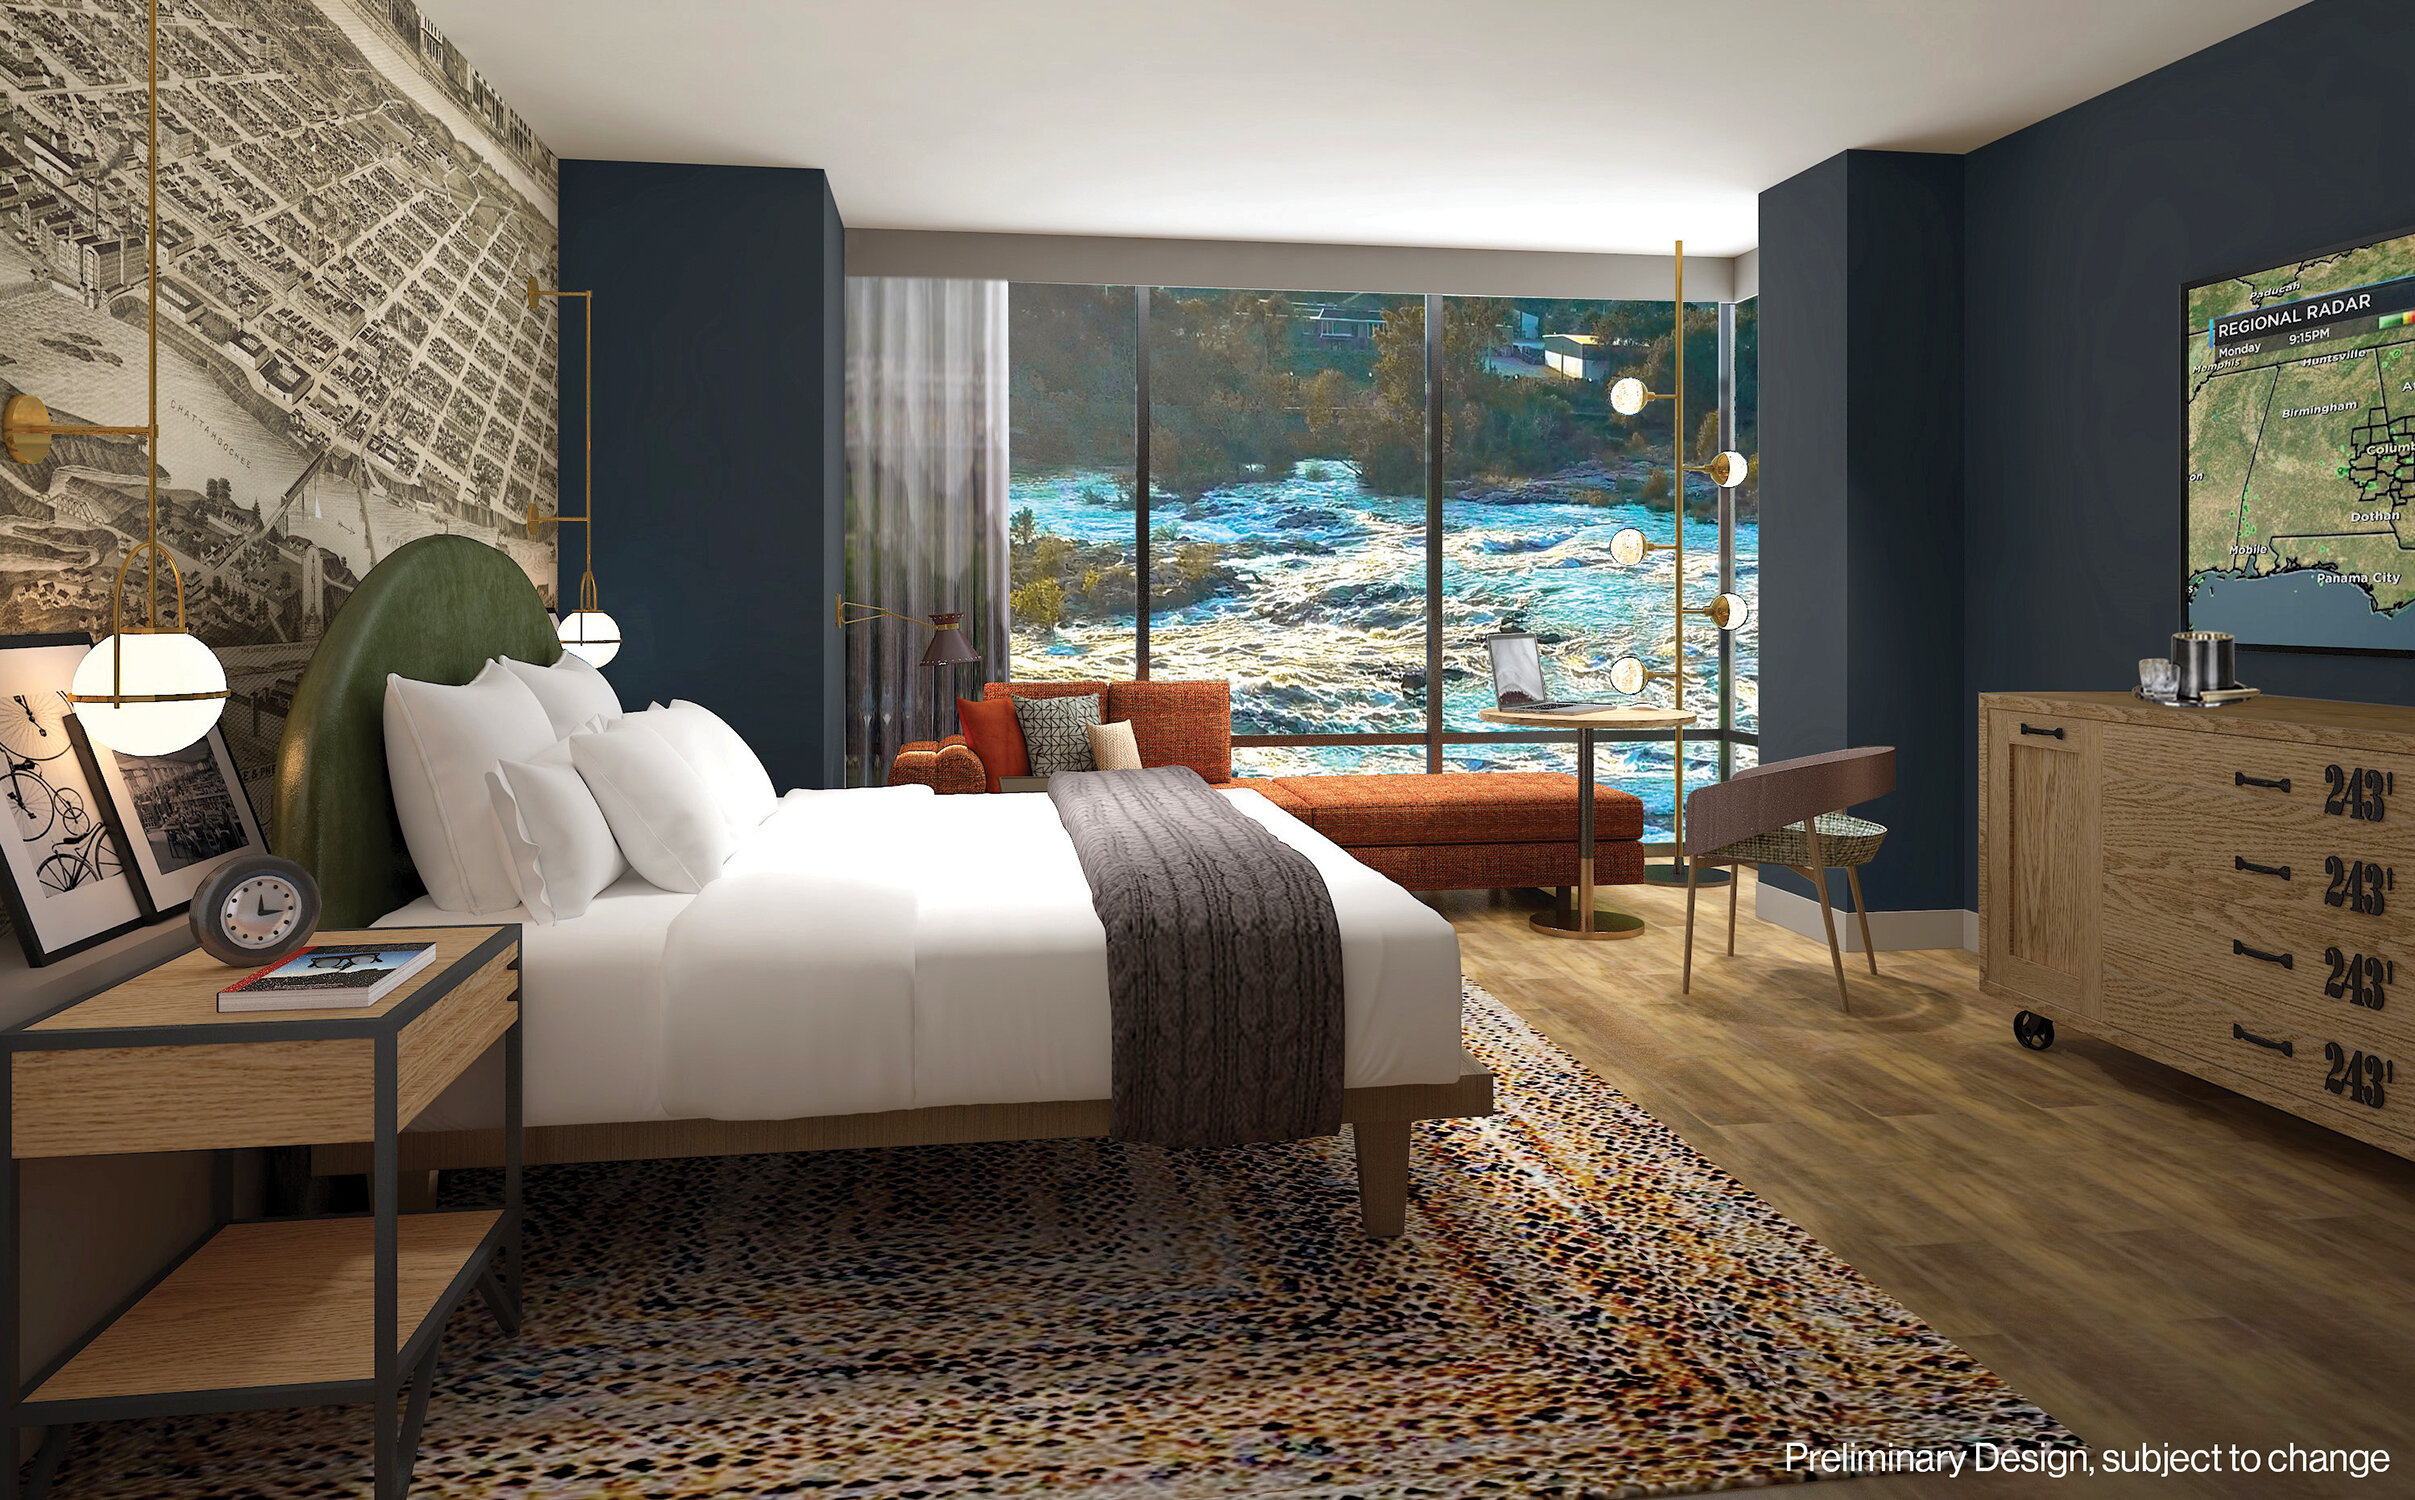 cmyk_Riverfront-Place-Hotel-(Hotel-Indigo)---Guestroom-Rendering---Blue-Wall-(Darker).jpg